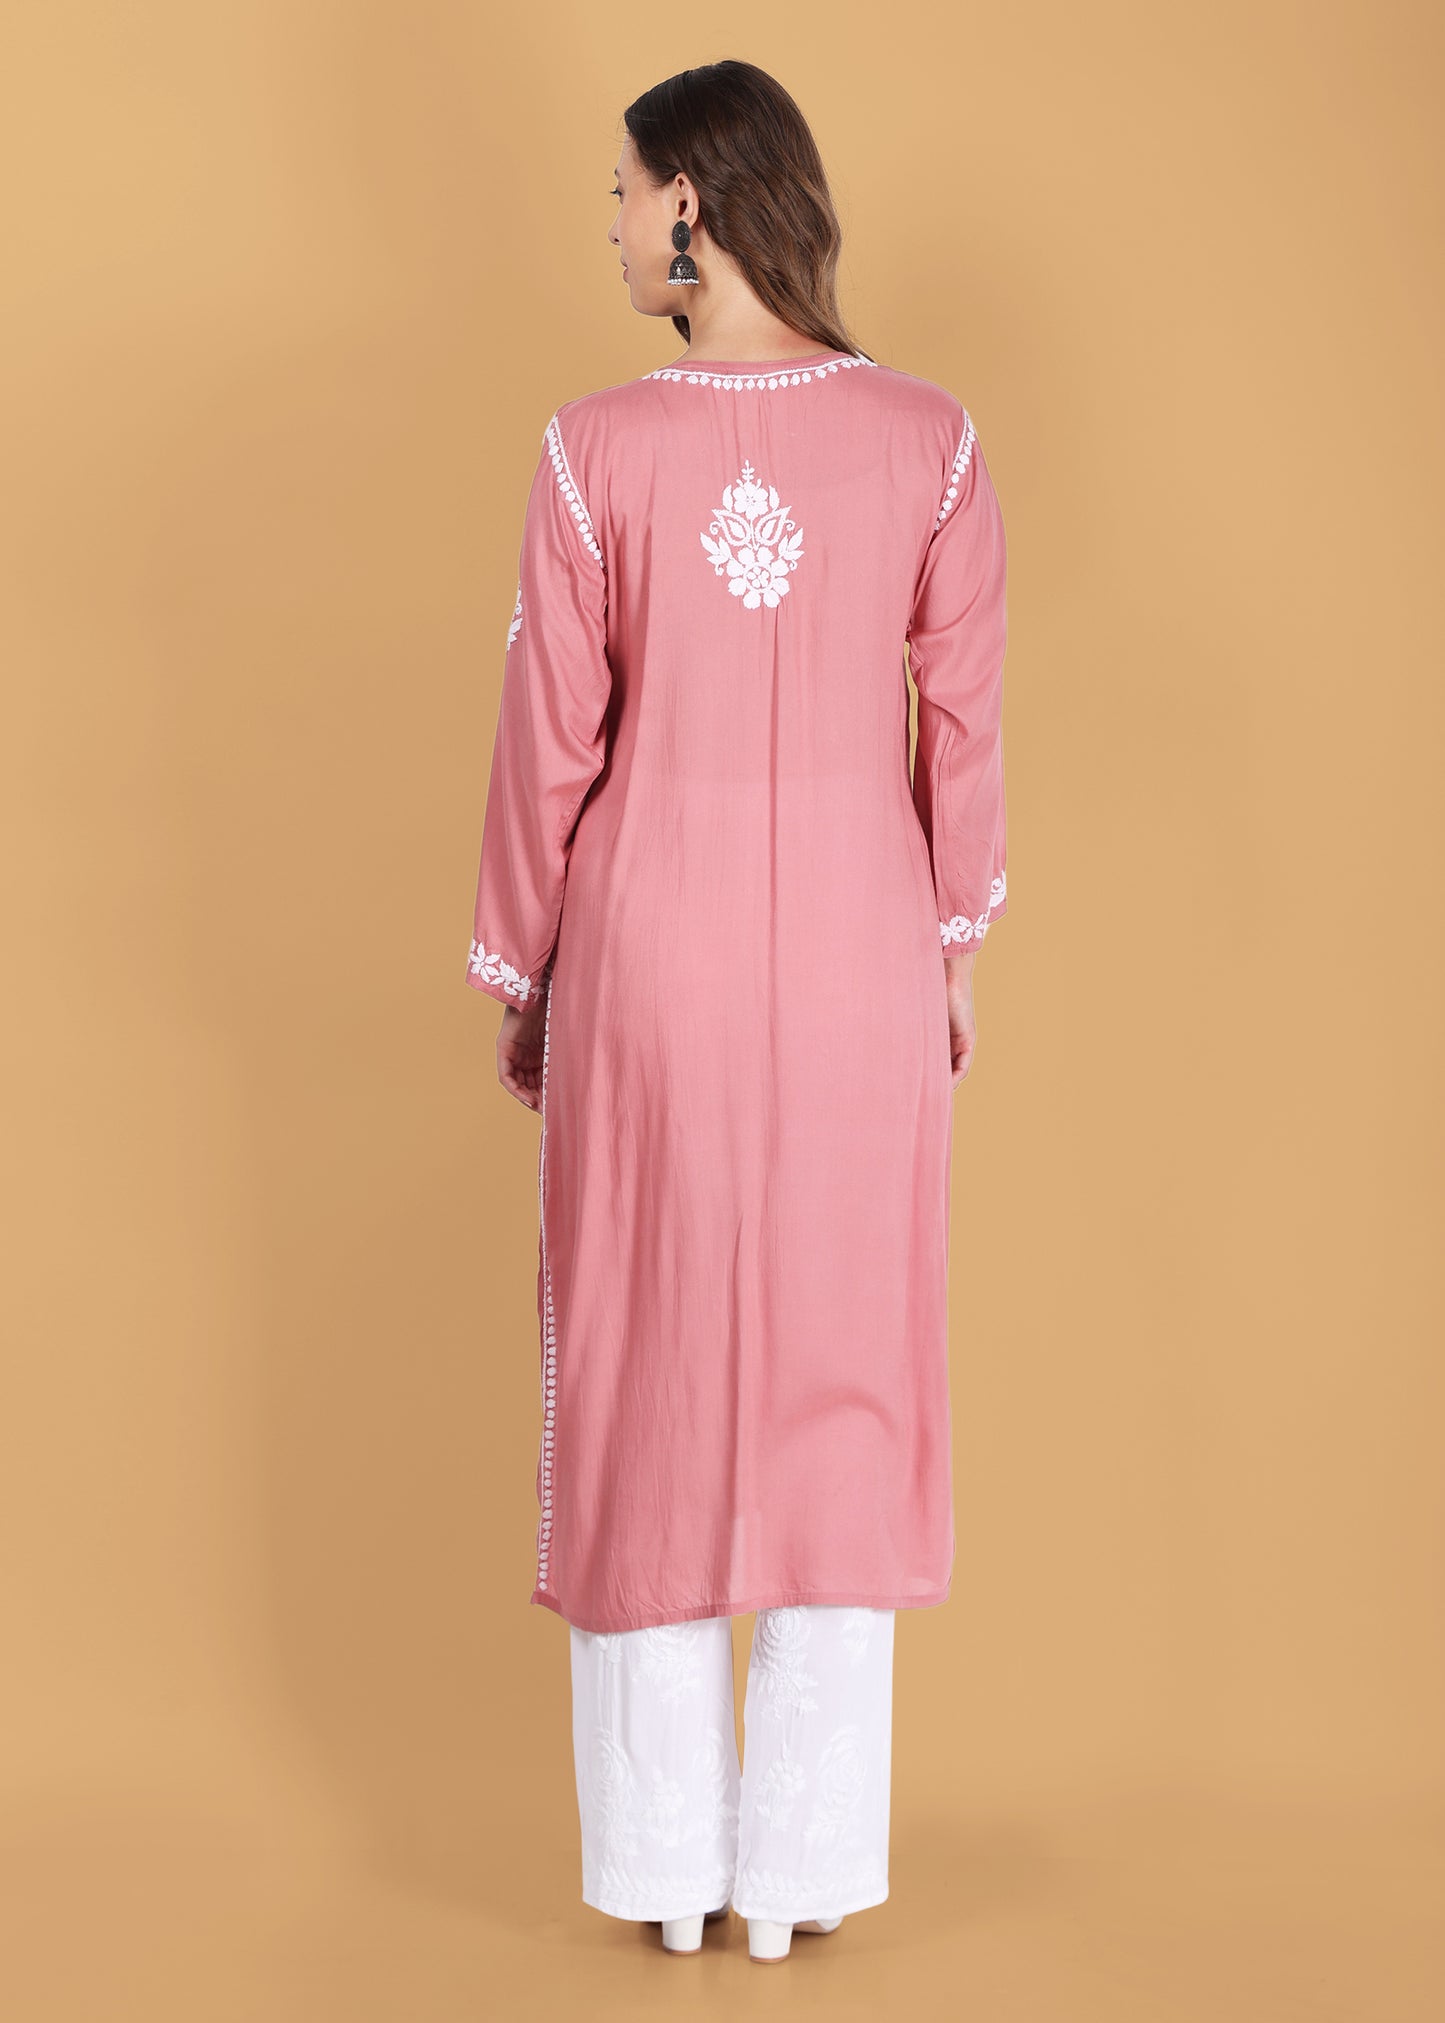 Pink Beautiful Lucknow Chikankari Ethnic Kurta -Modal Fabric.